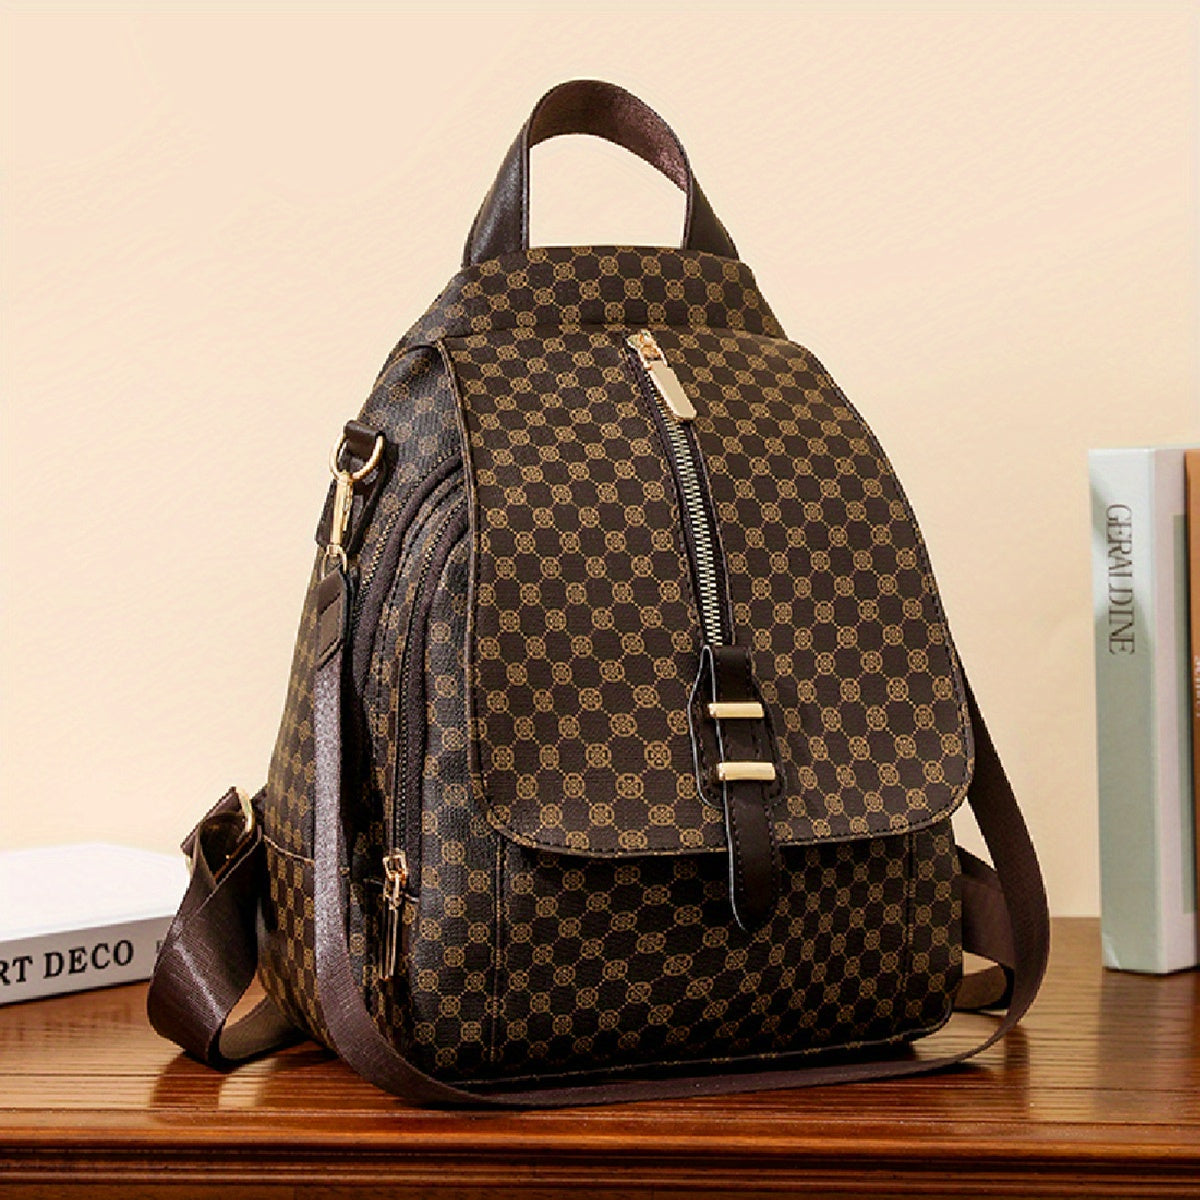 Retro Polka Dot Print Backpack Purse, Fashion Two-way Shoulder Bag, Multifunctional Travel School Bag